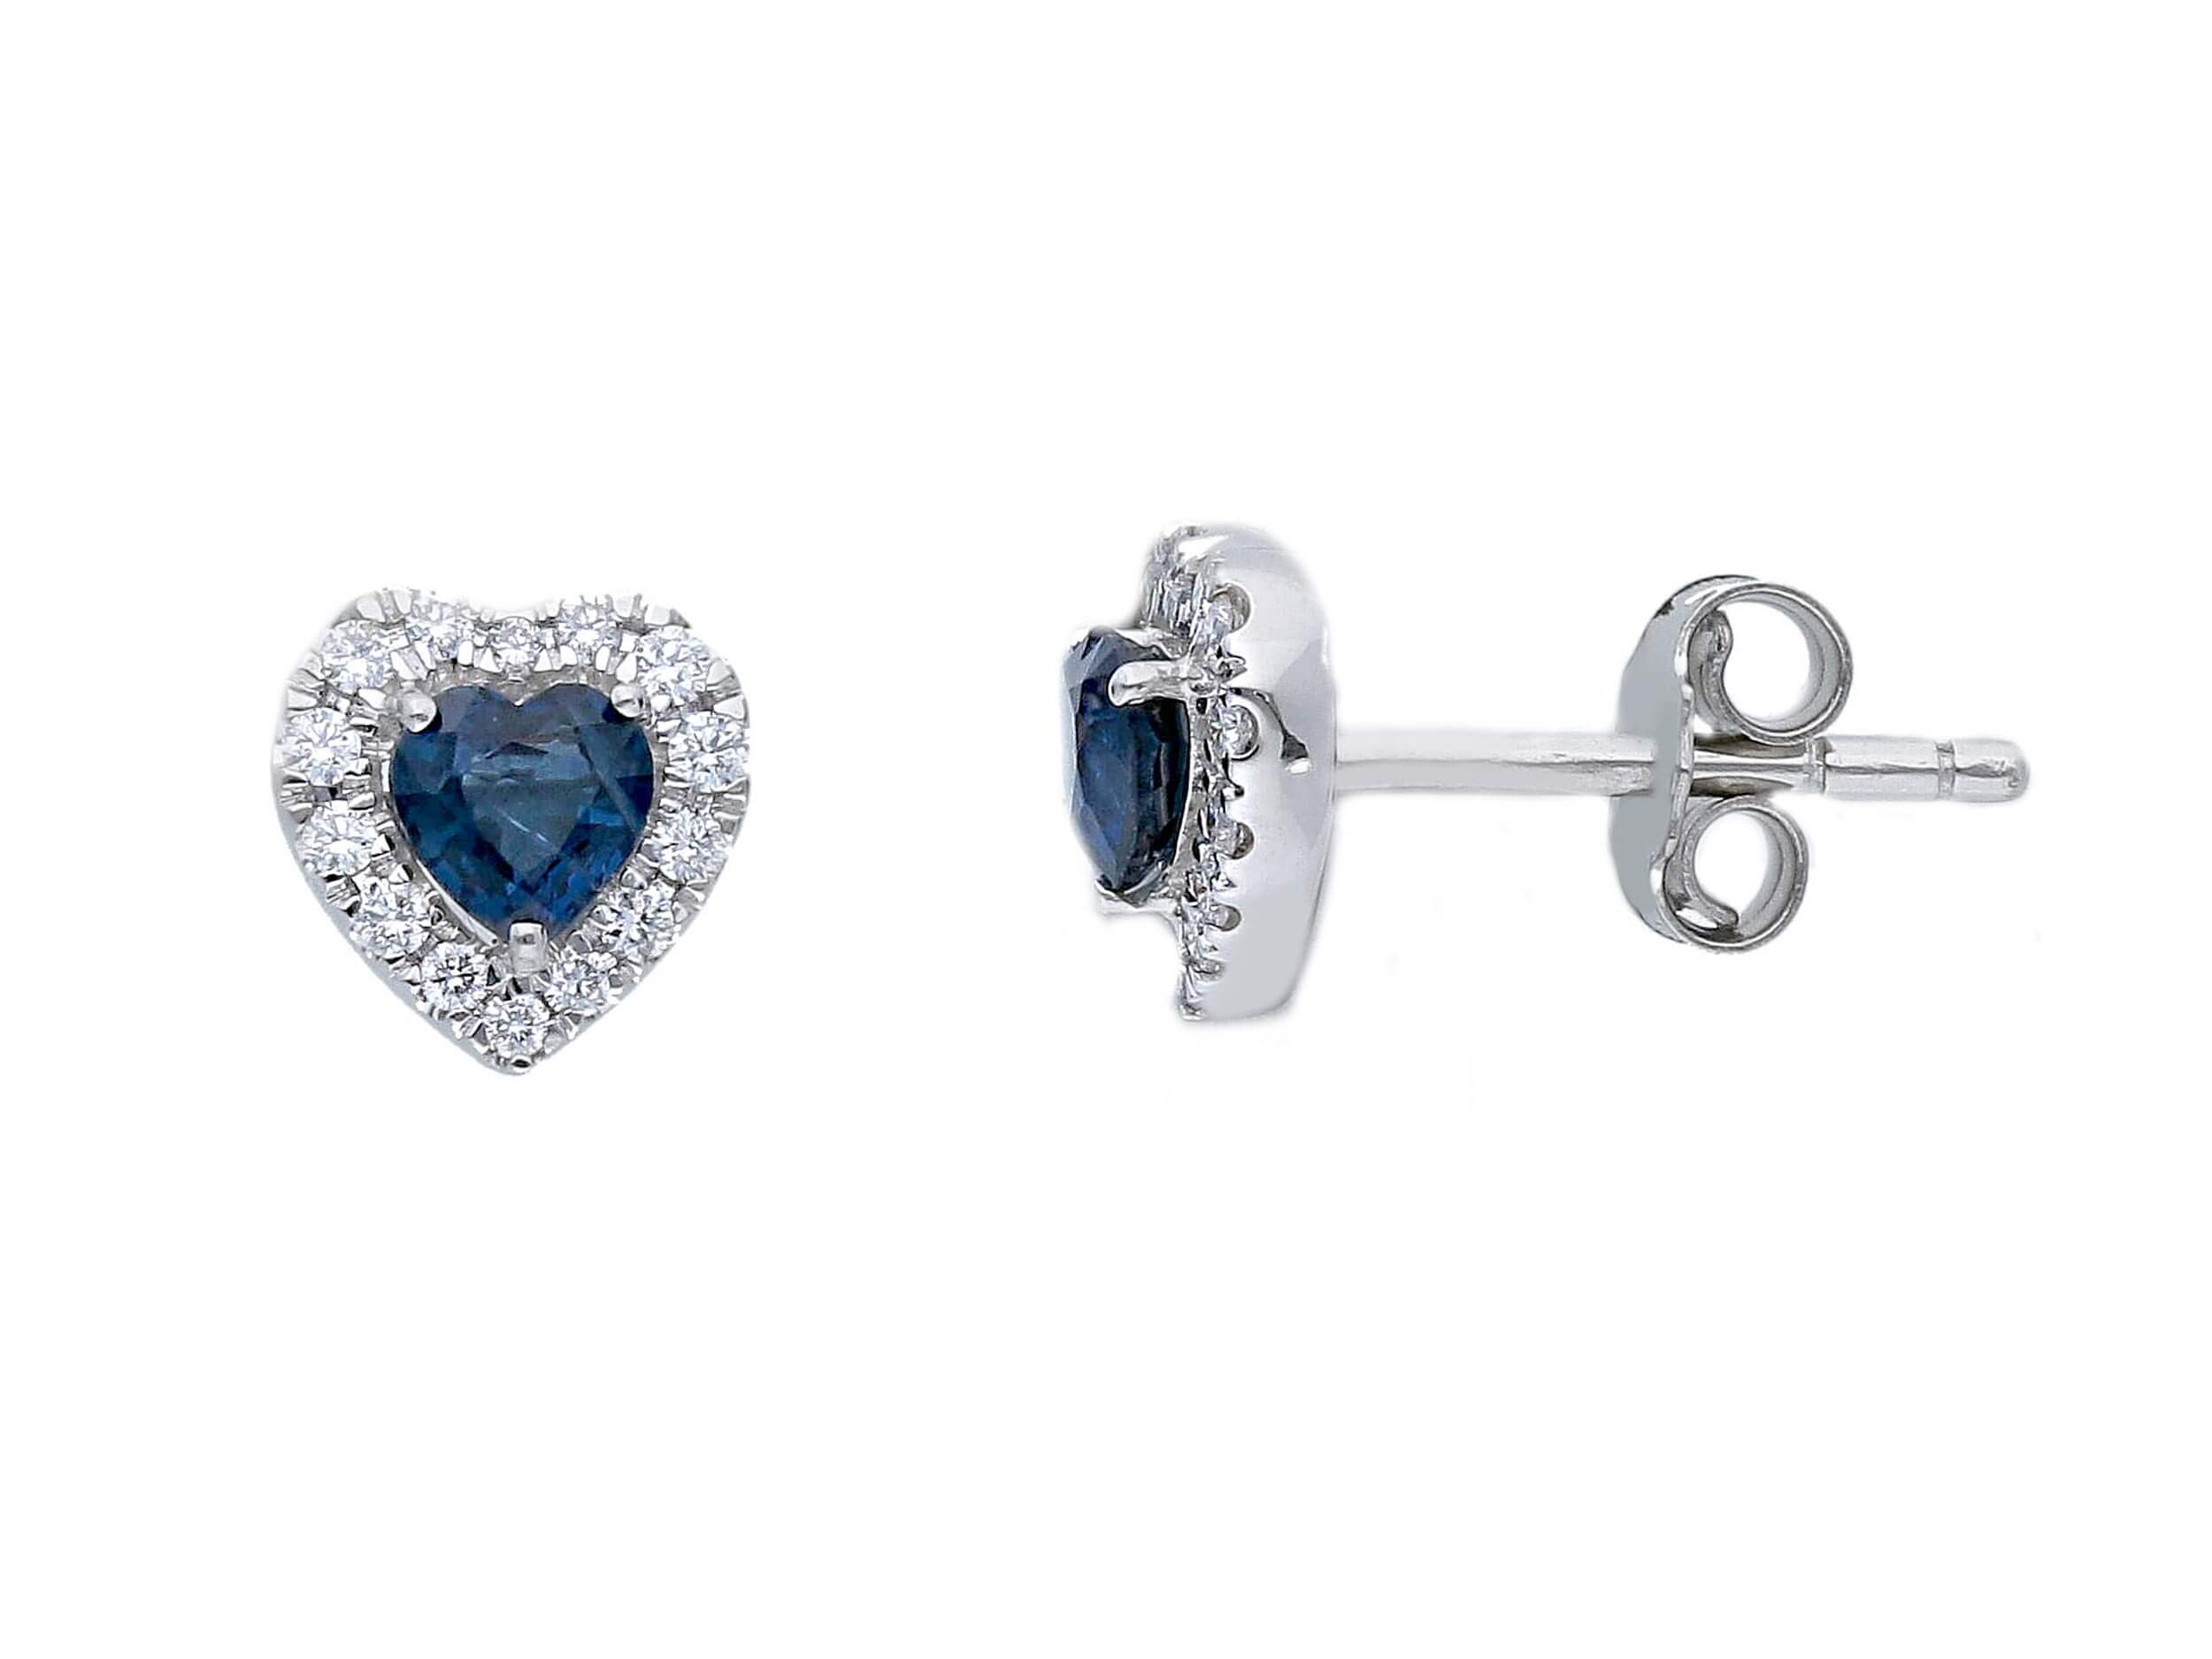 Sapphire Earrings Blue Gold and Diamonds BELLE EPOQUE Art. 225833